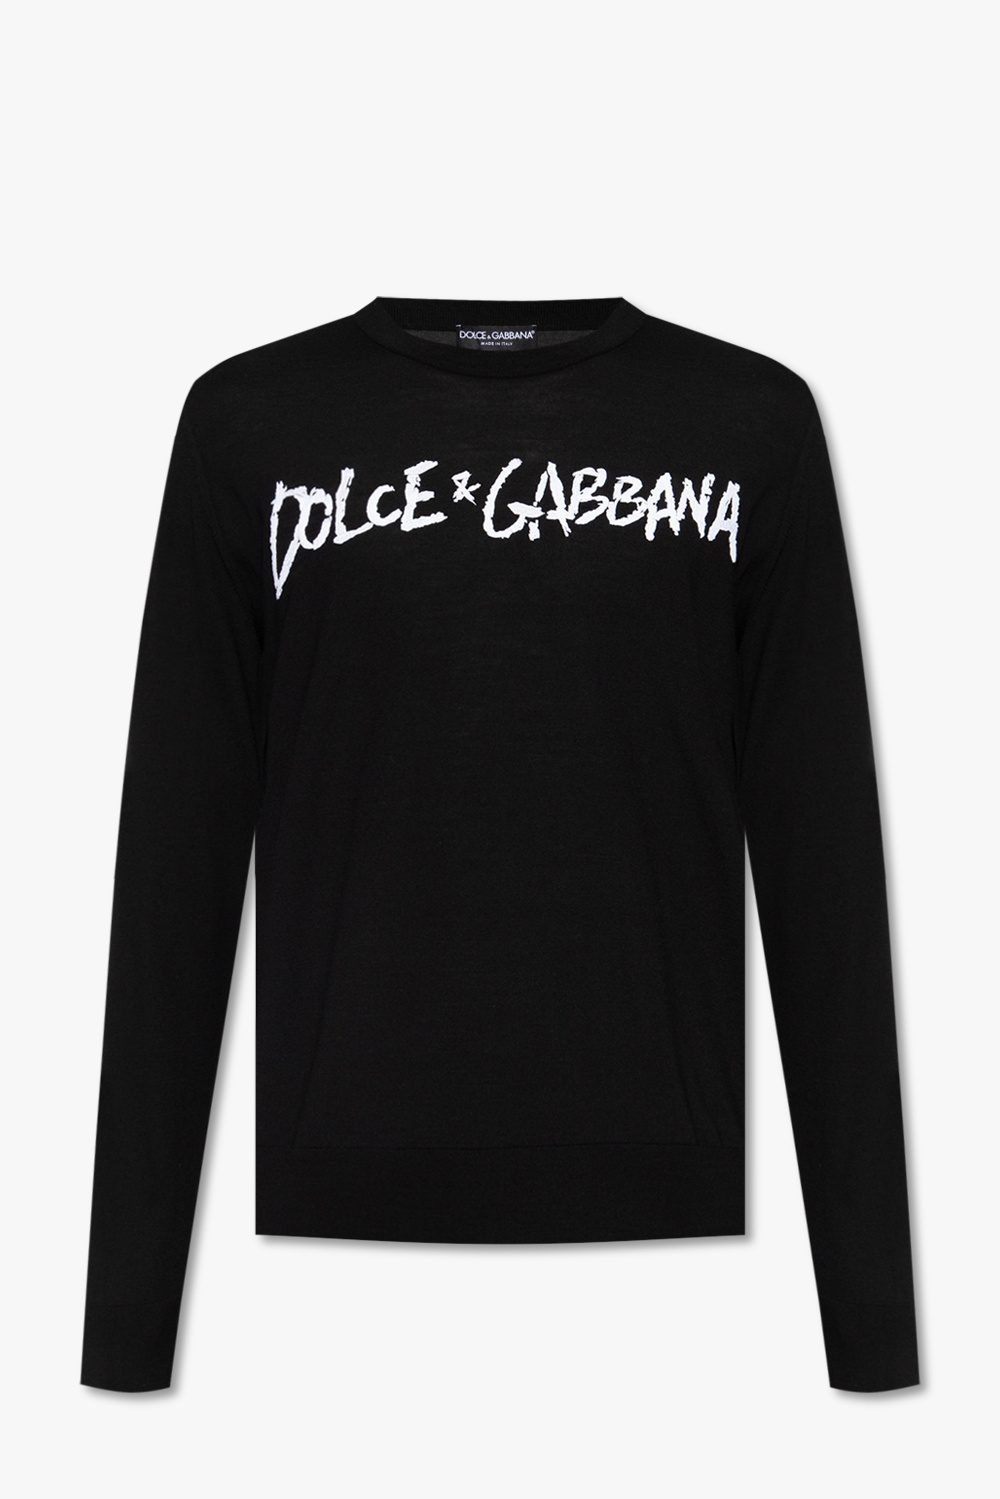 Dolce & Gabbana Wool sweater with logo